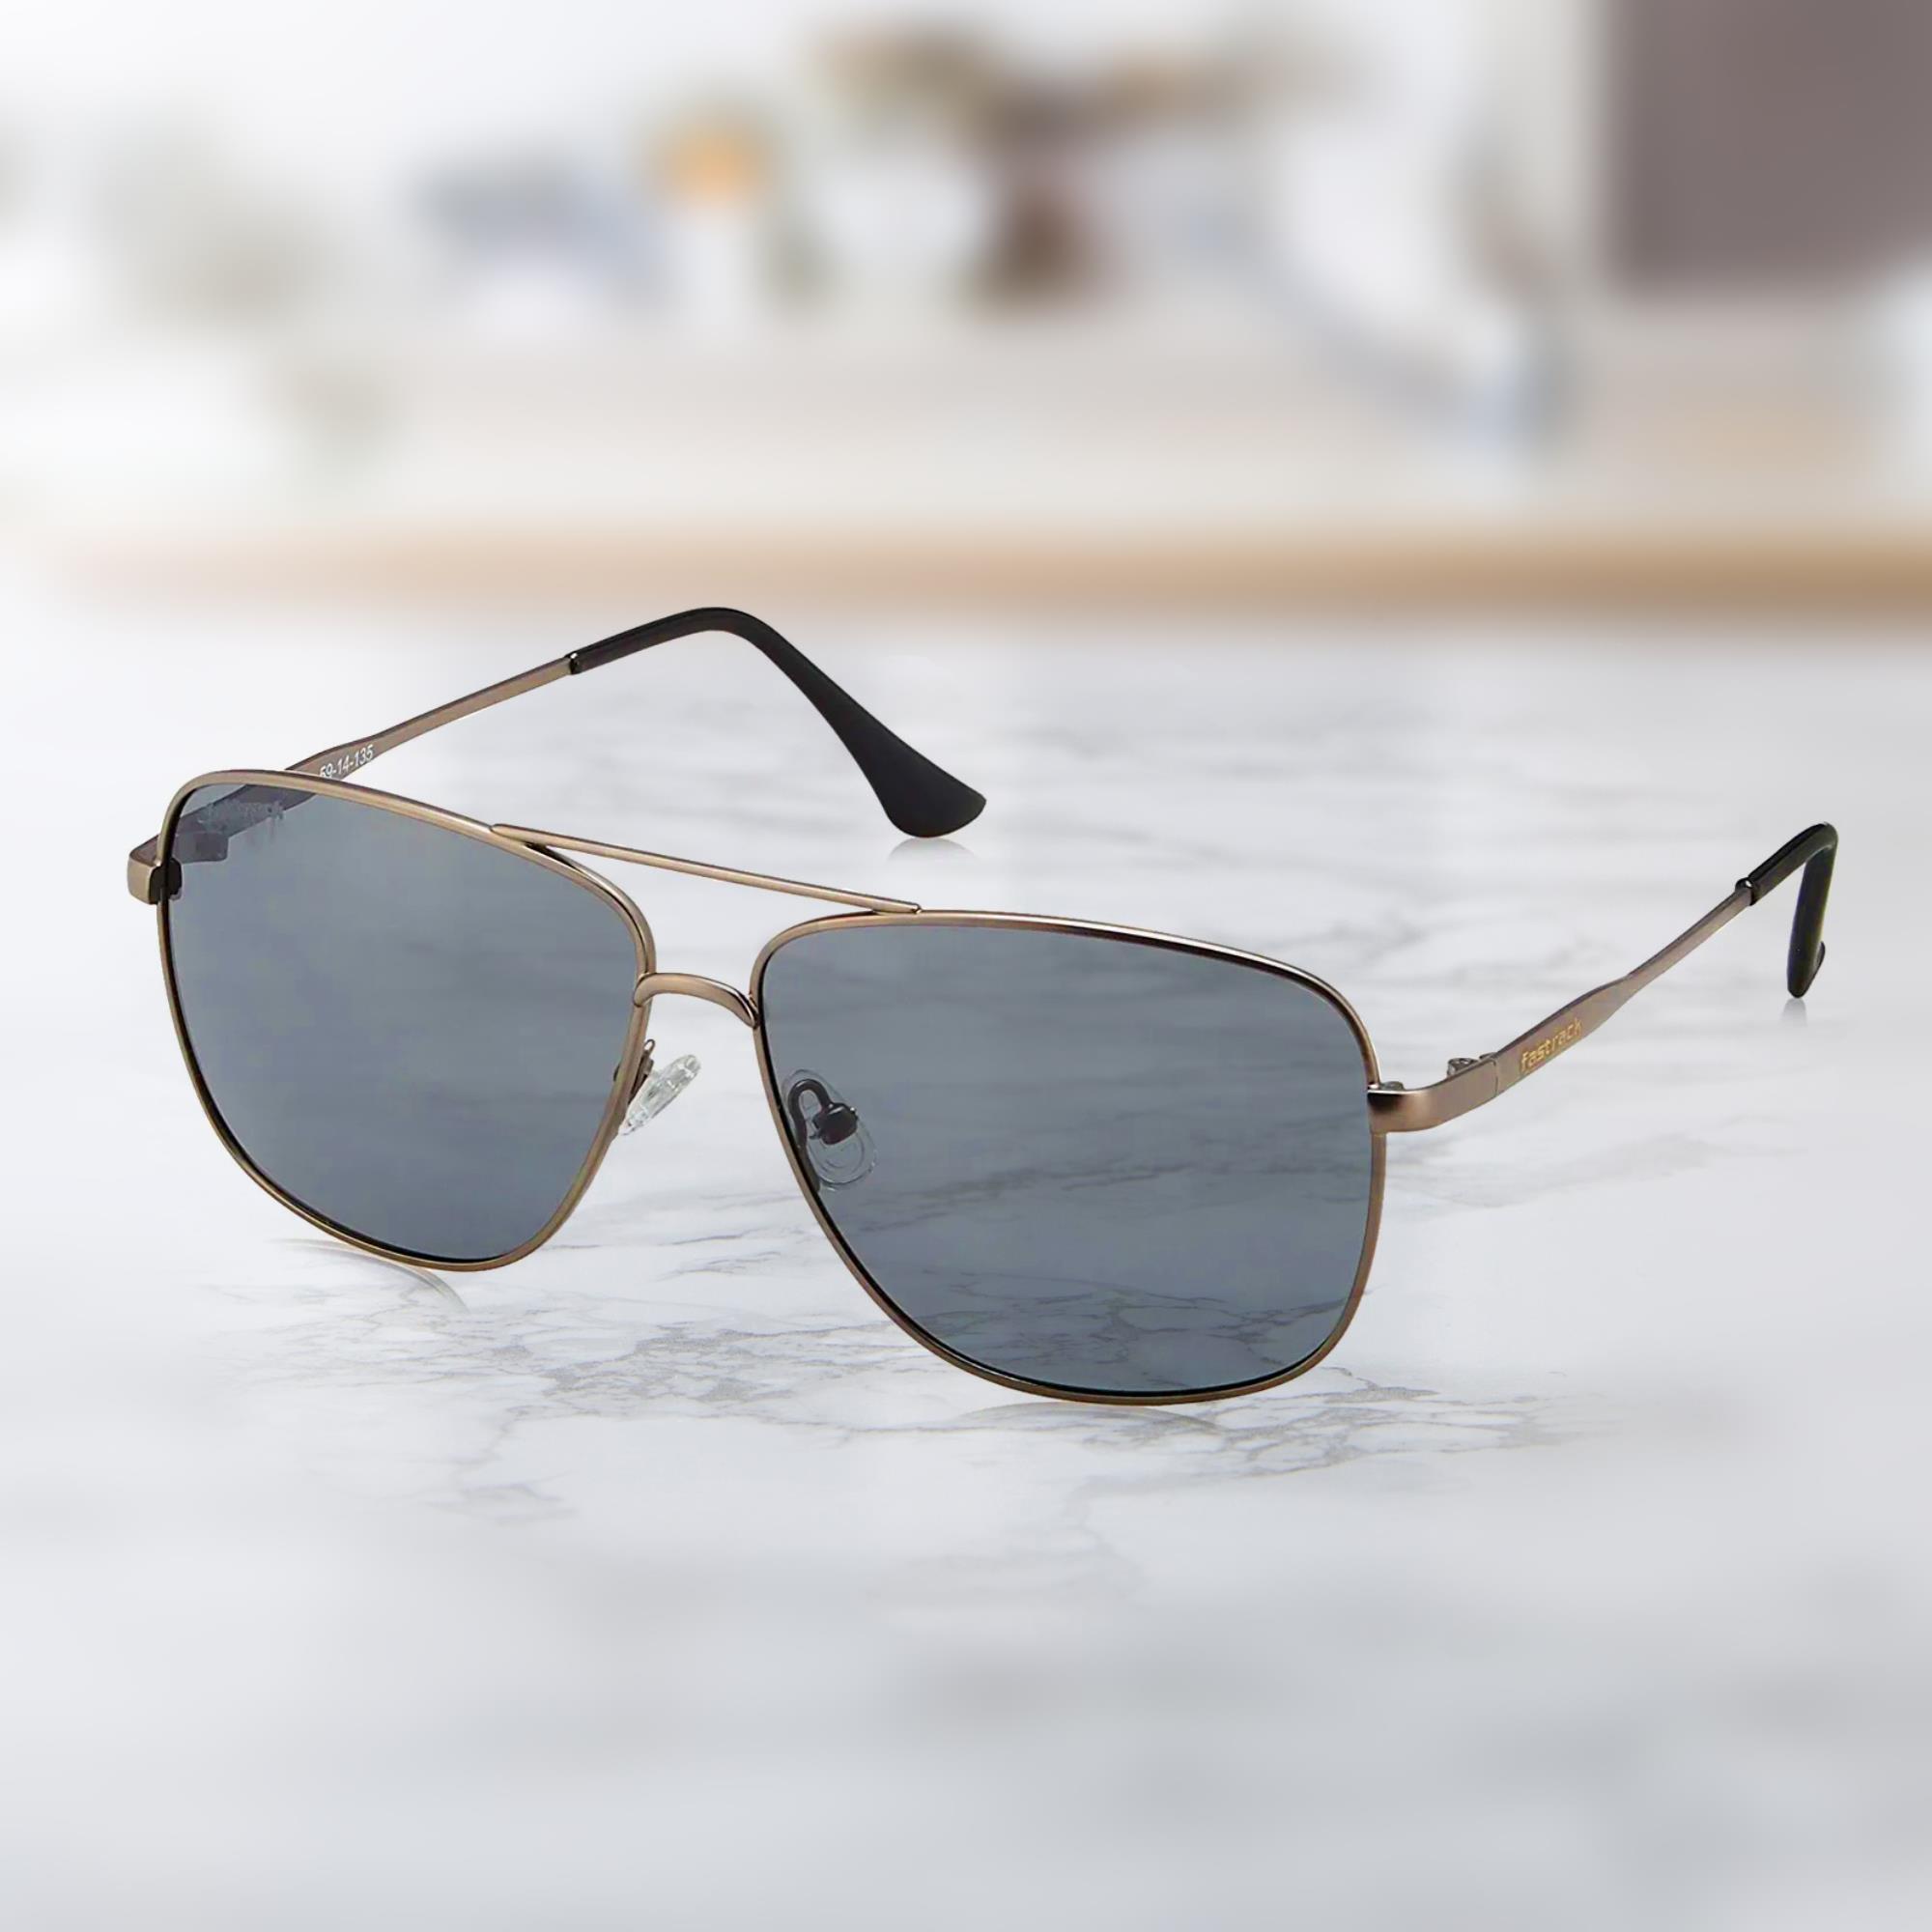 Top more than 168 fastrack sunglasses chennai latest